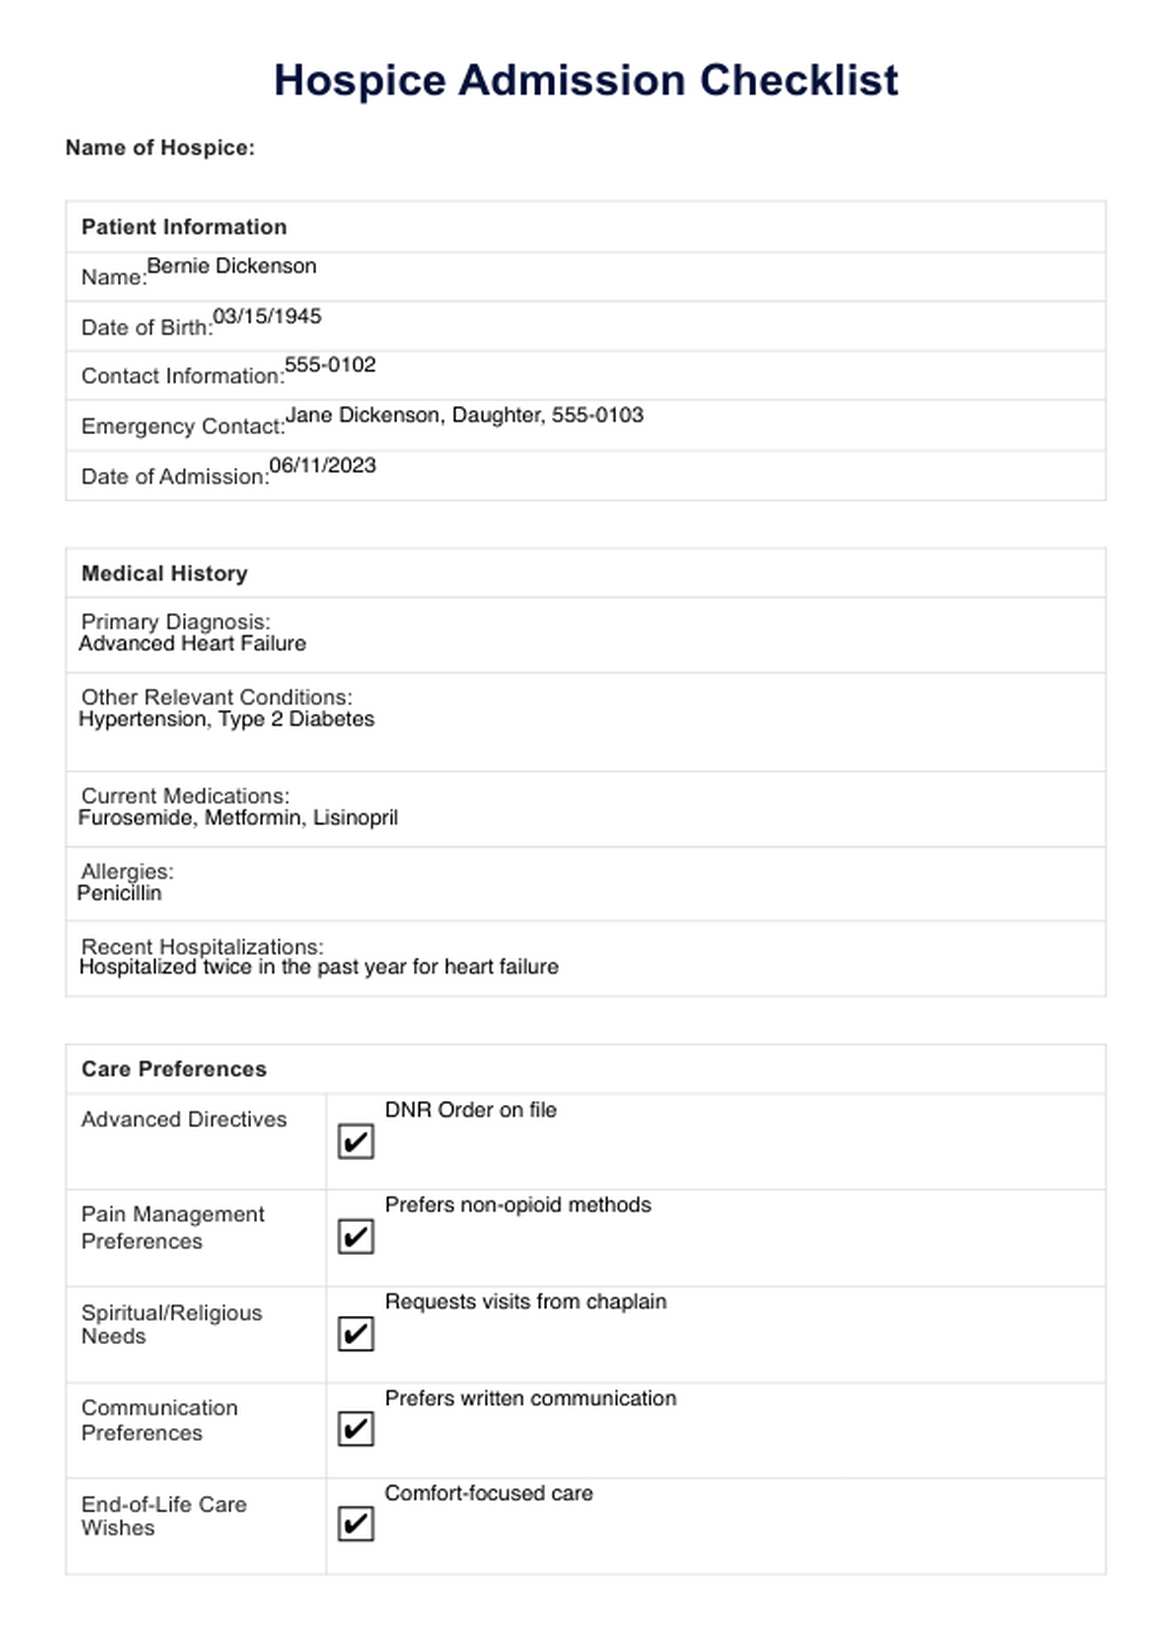 Hospice Admission Checklist PDF Example